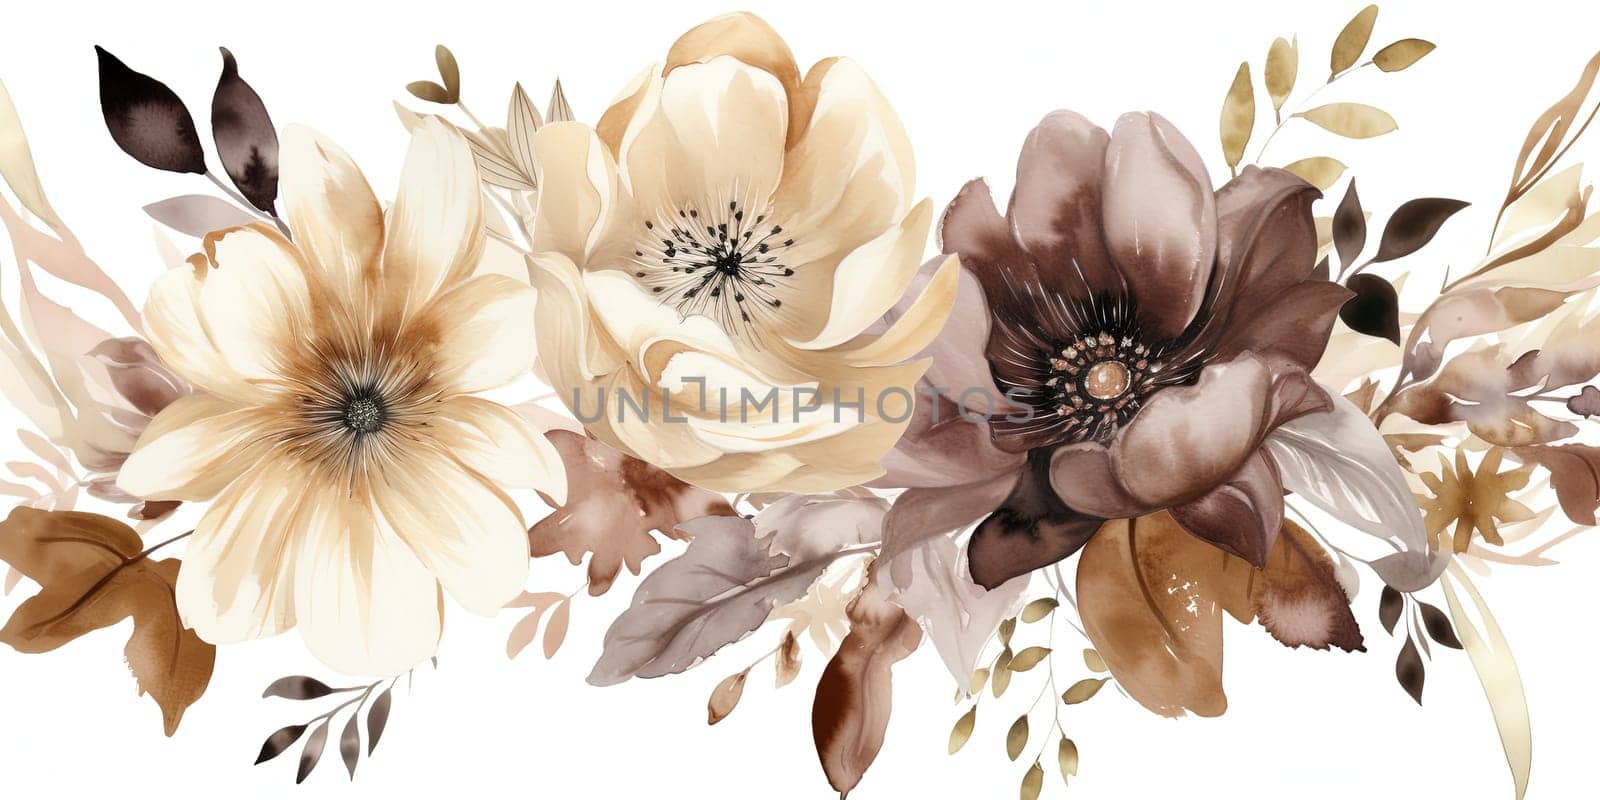 Watercolor Pattern Illustration In Boho Style Summer Flowers by GekaSkr